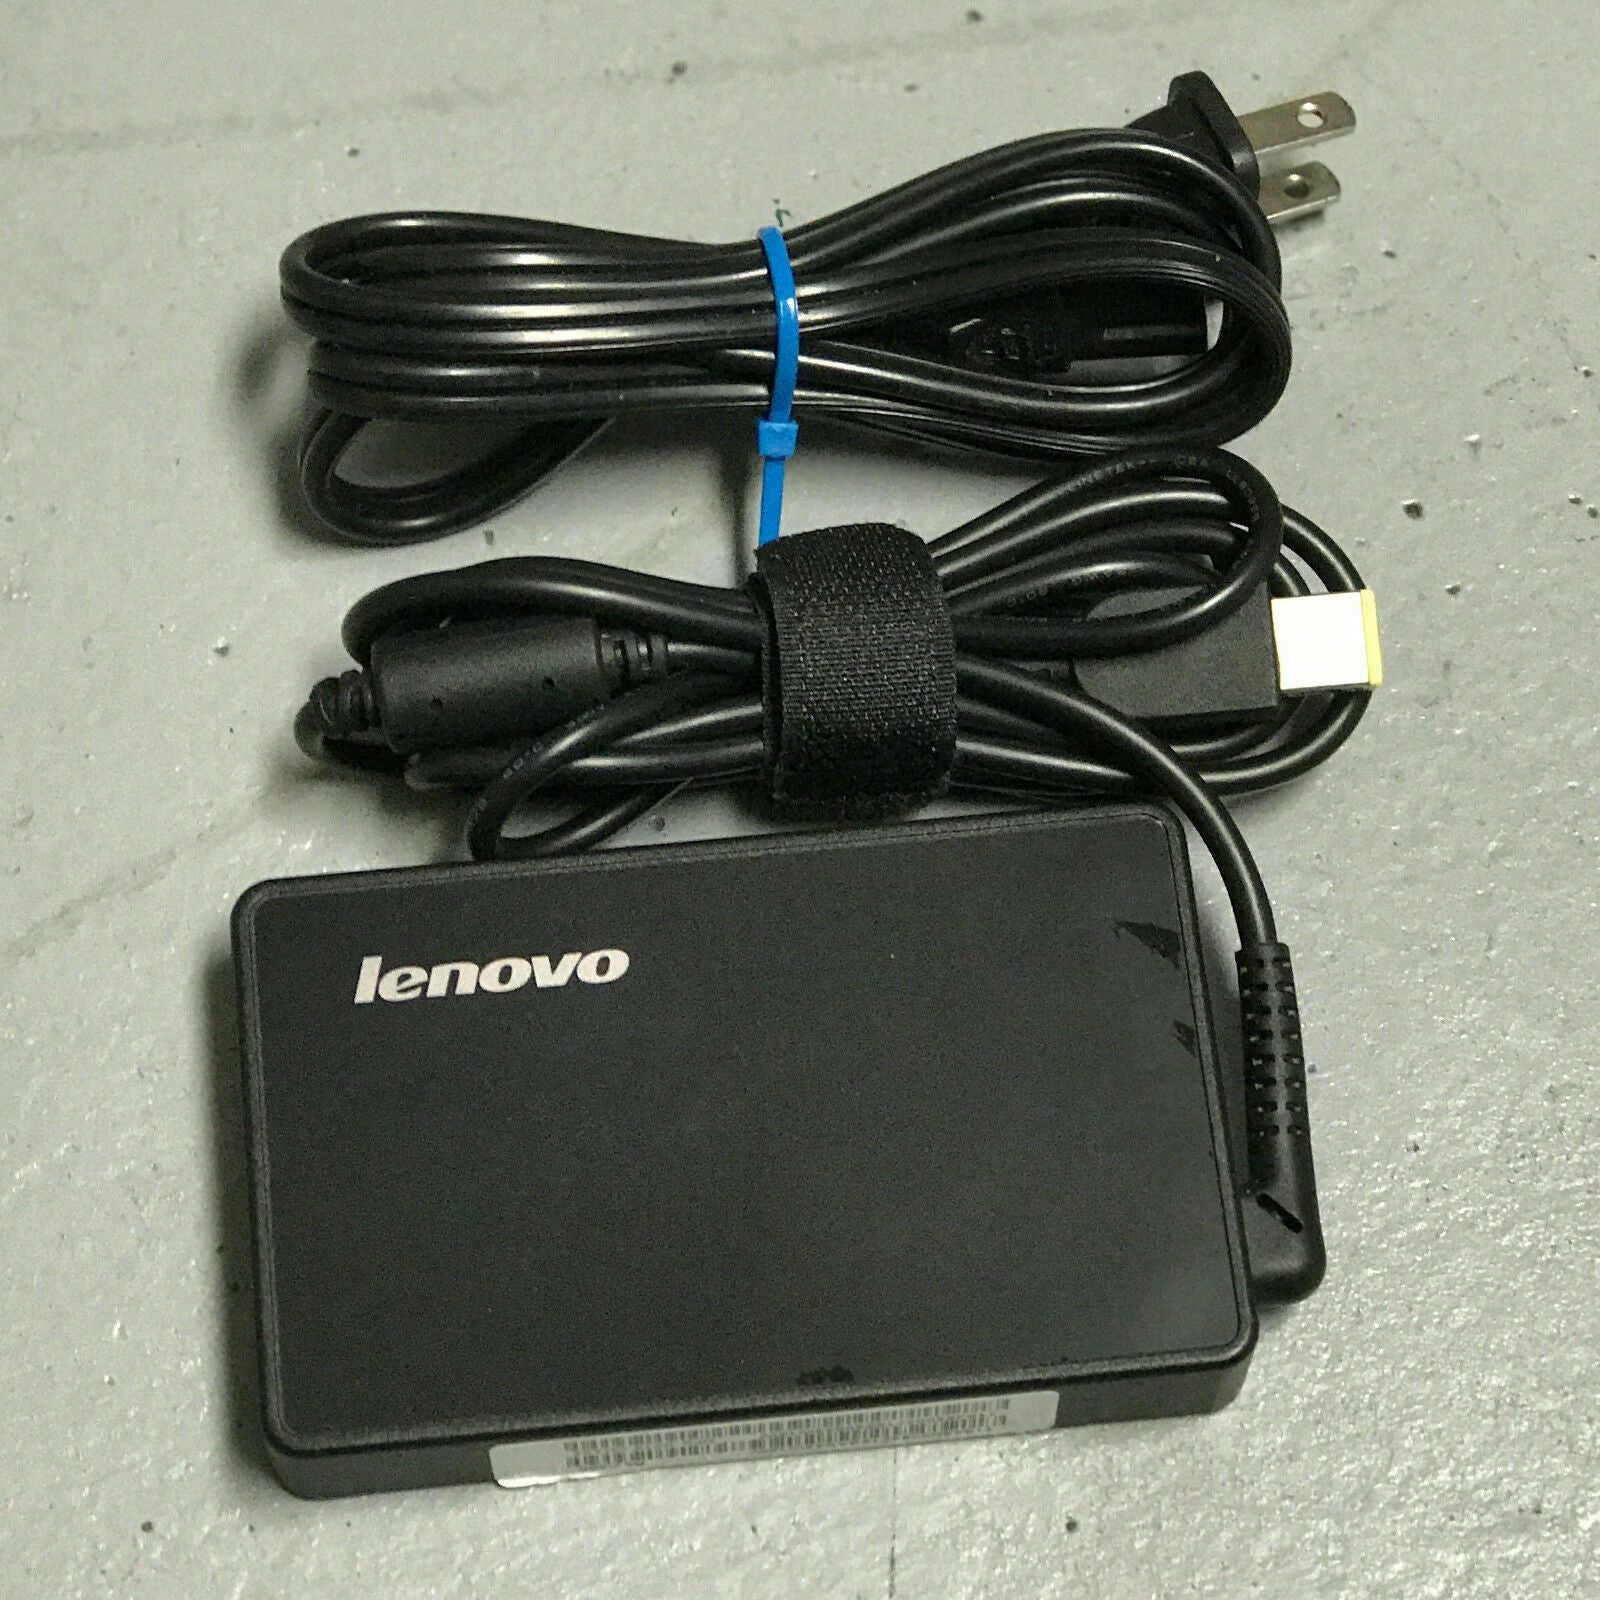 Genuine Lenovo 65W Slim AC Adapter for Lenovo IdeaPad Yoga 2 Pro 59428034 Charger